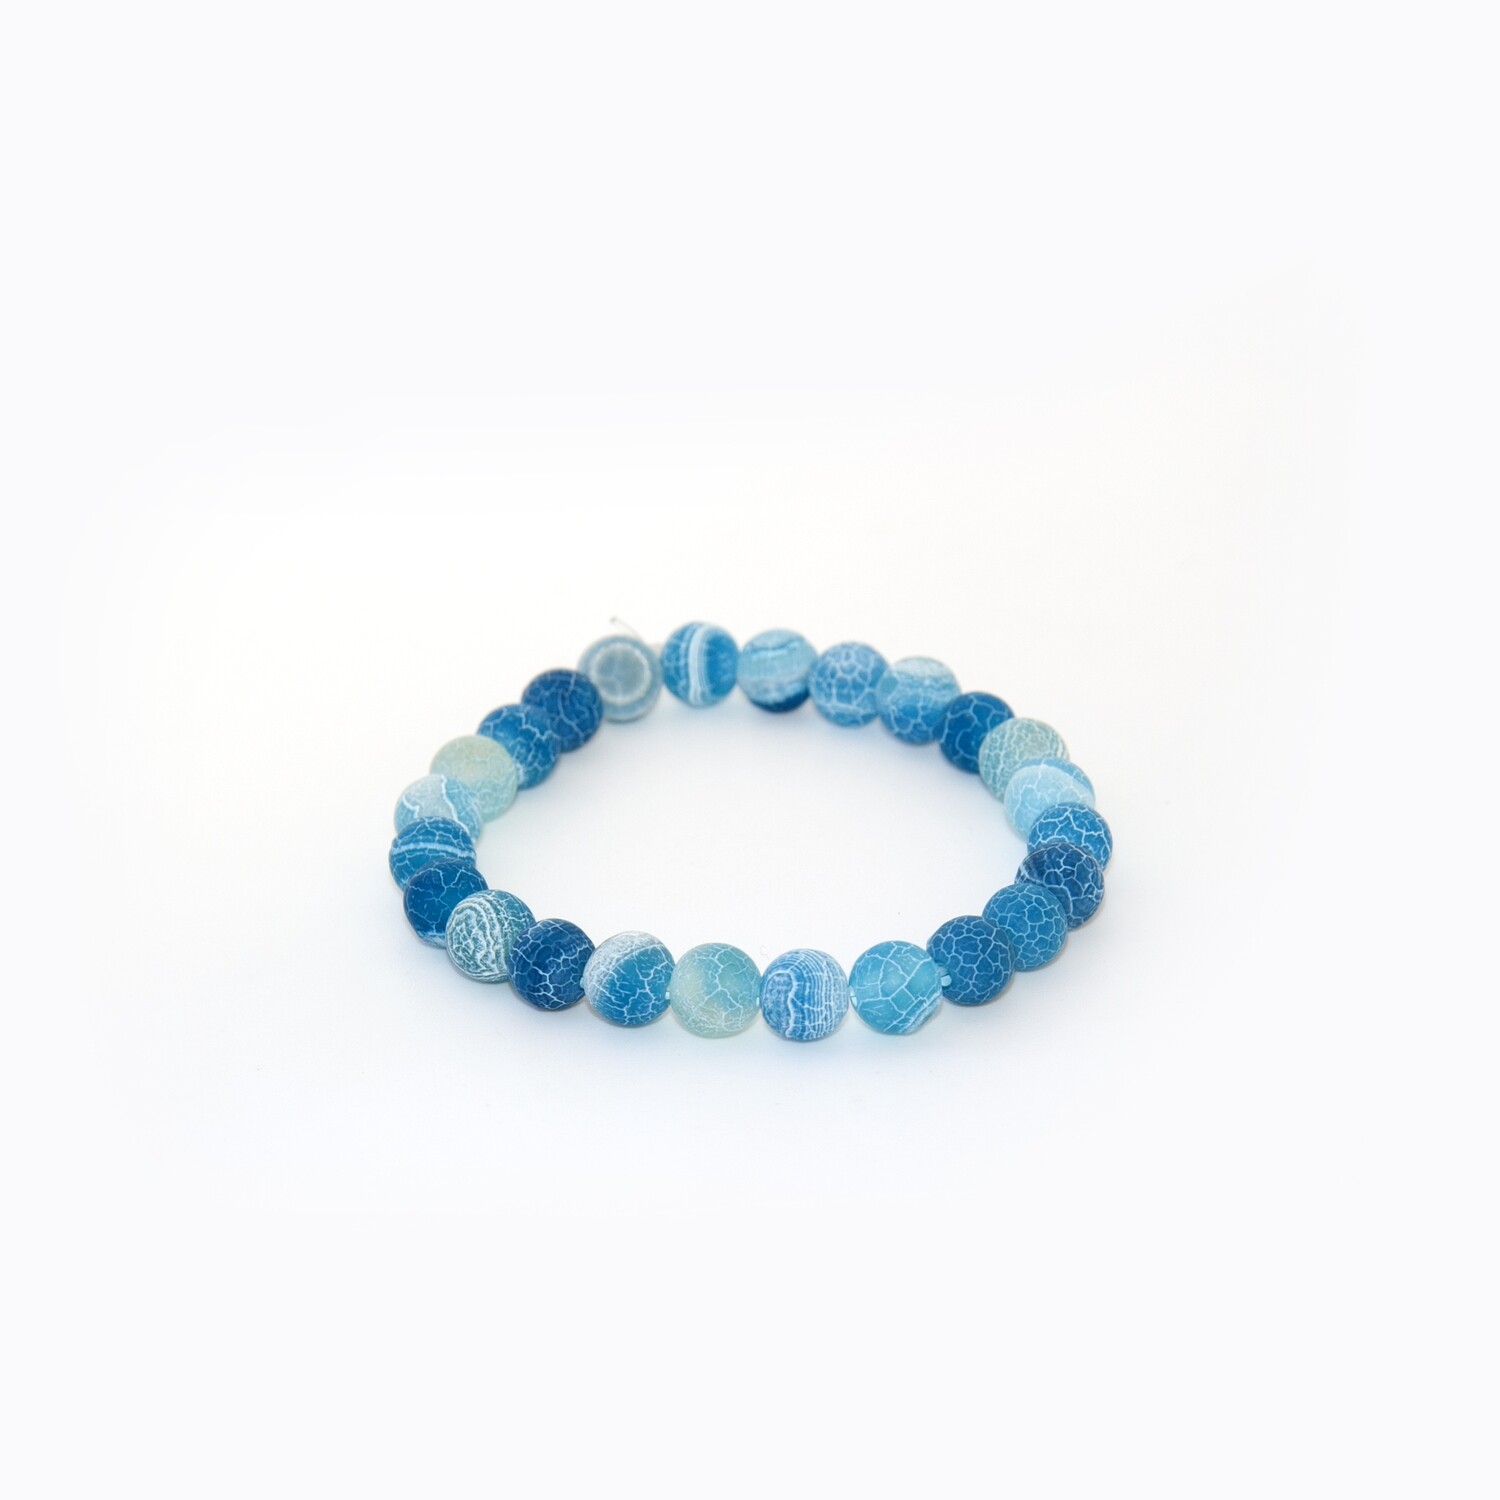 Light blue frosted agate bracelet